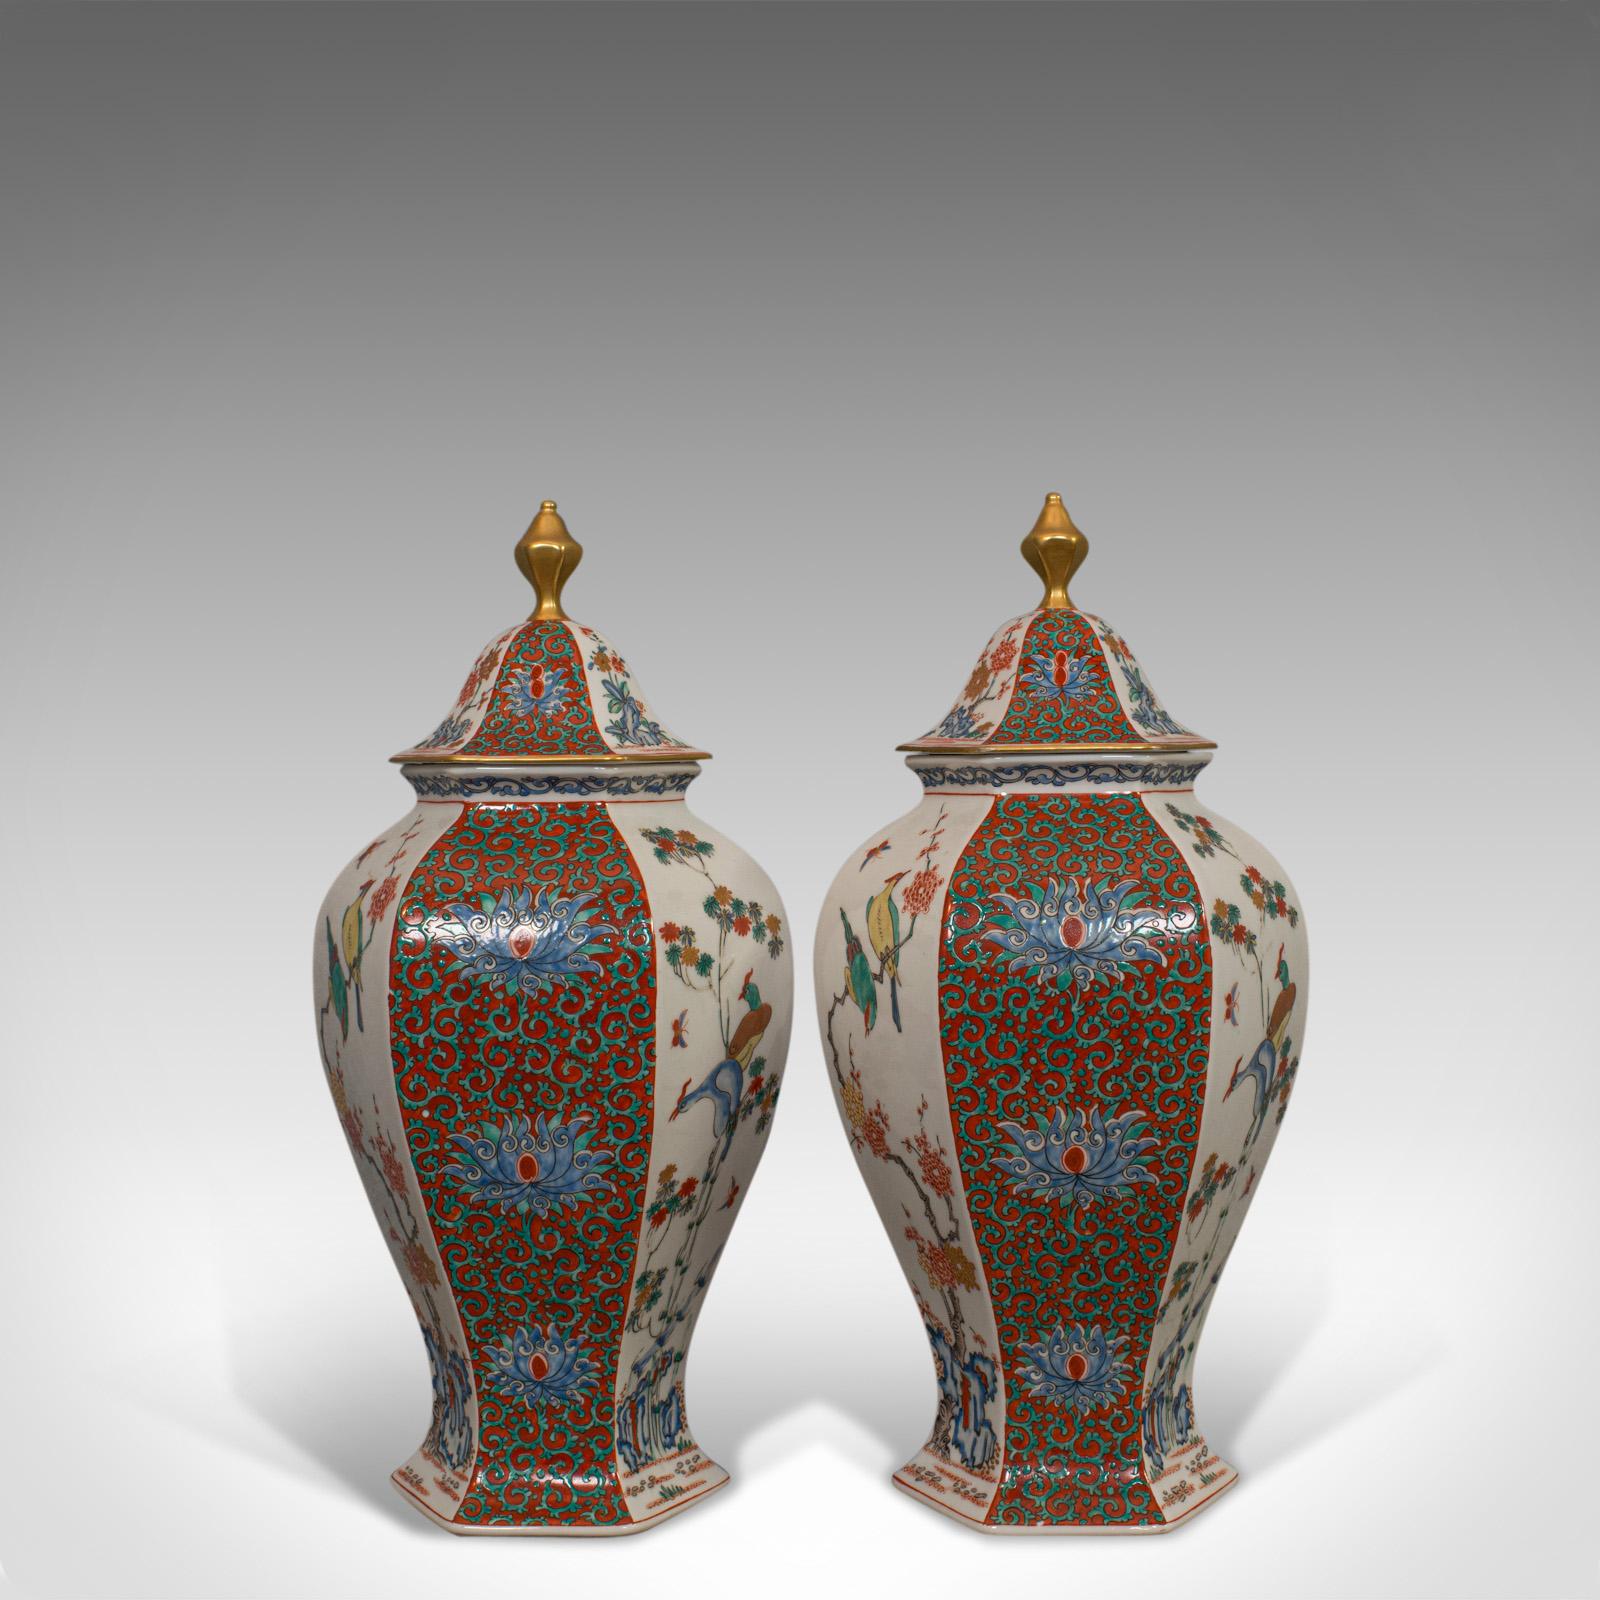 Anglo-Japanese Pair of Vintage Hexagonal Spice Jars, Oriental, Ceramic, Baluster, Urn, Avian For Sale